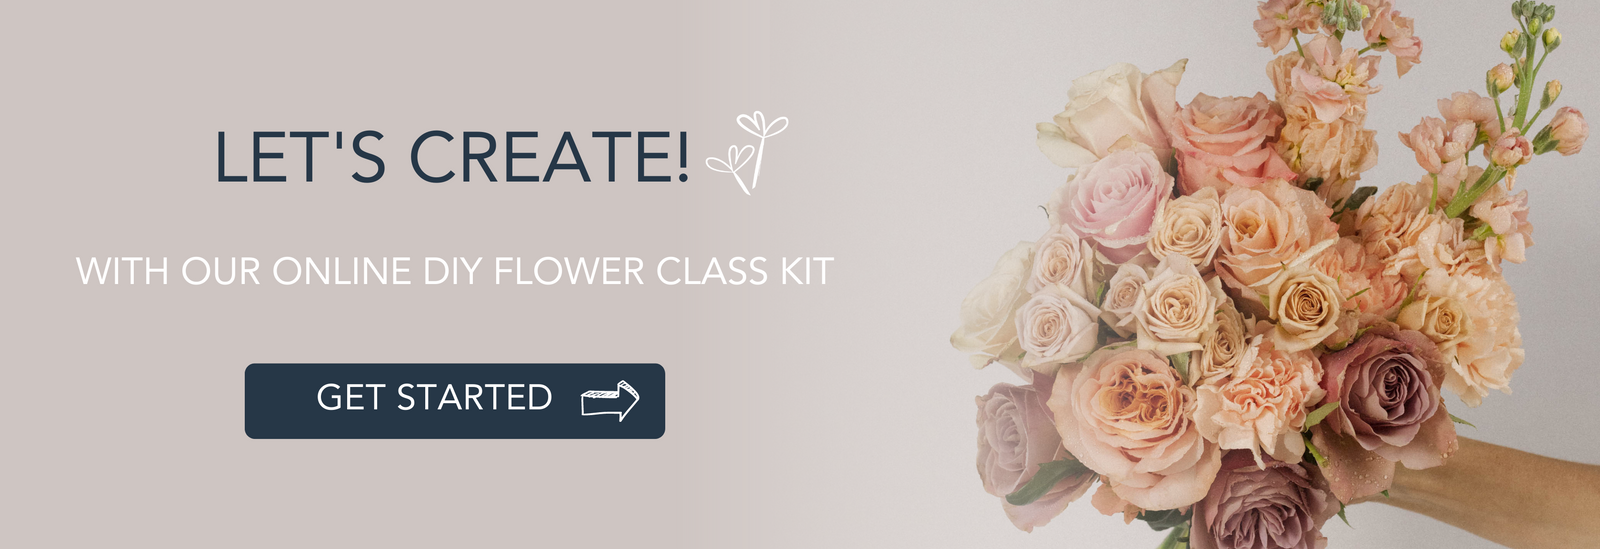 Indoor Garden Kit and Flower Bouquet - The Flower Fix